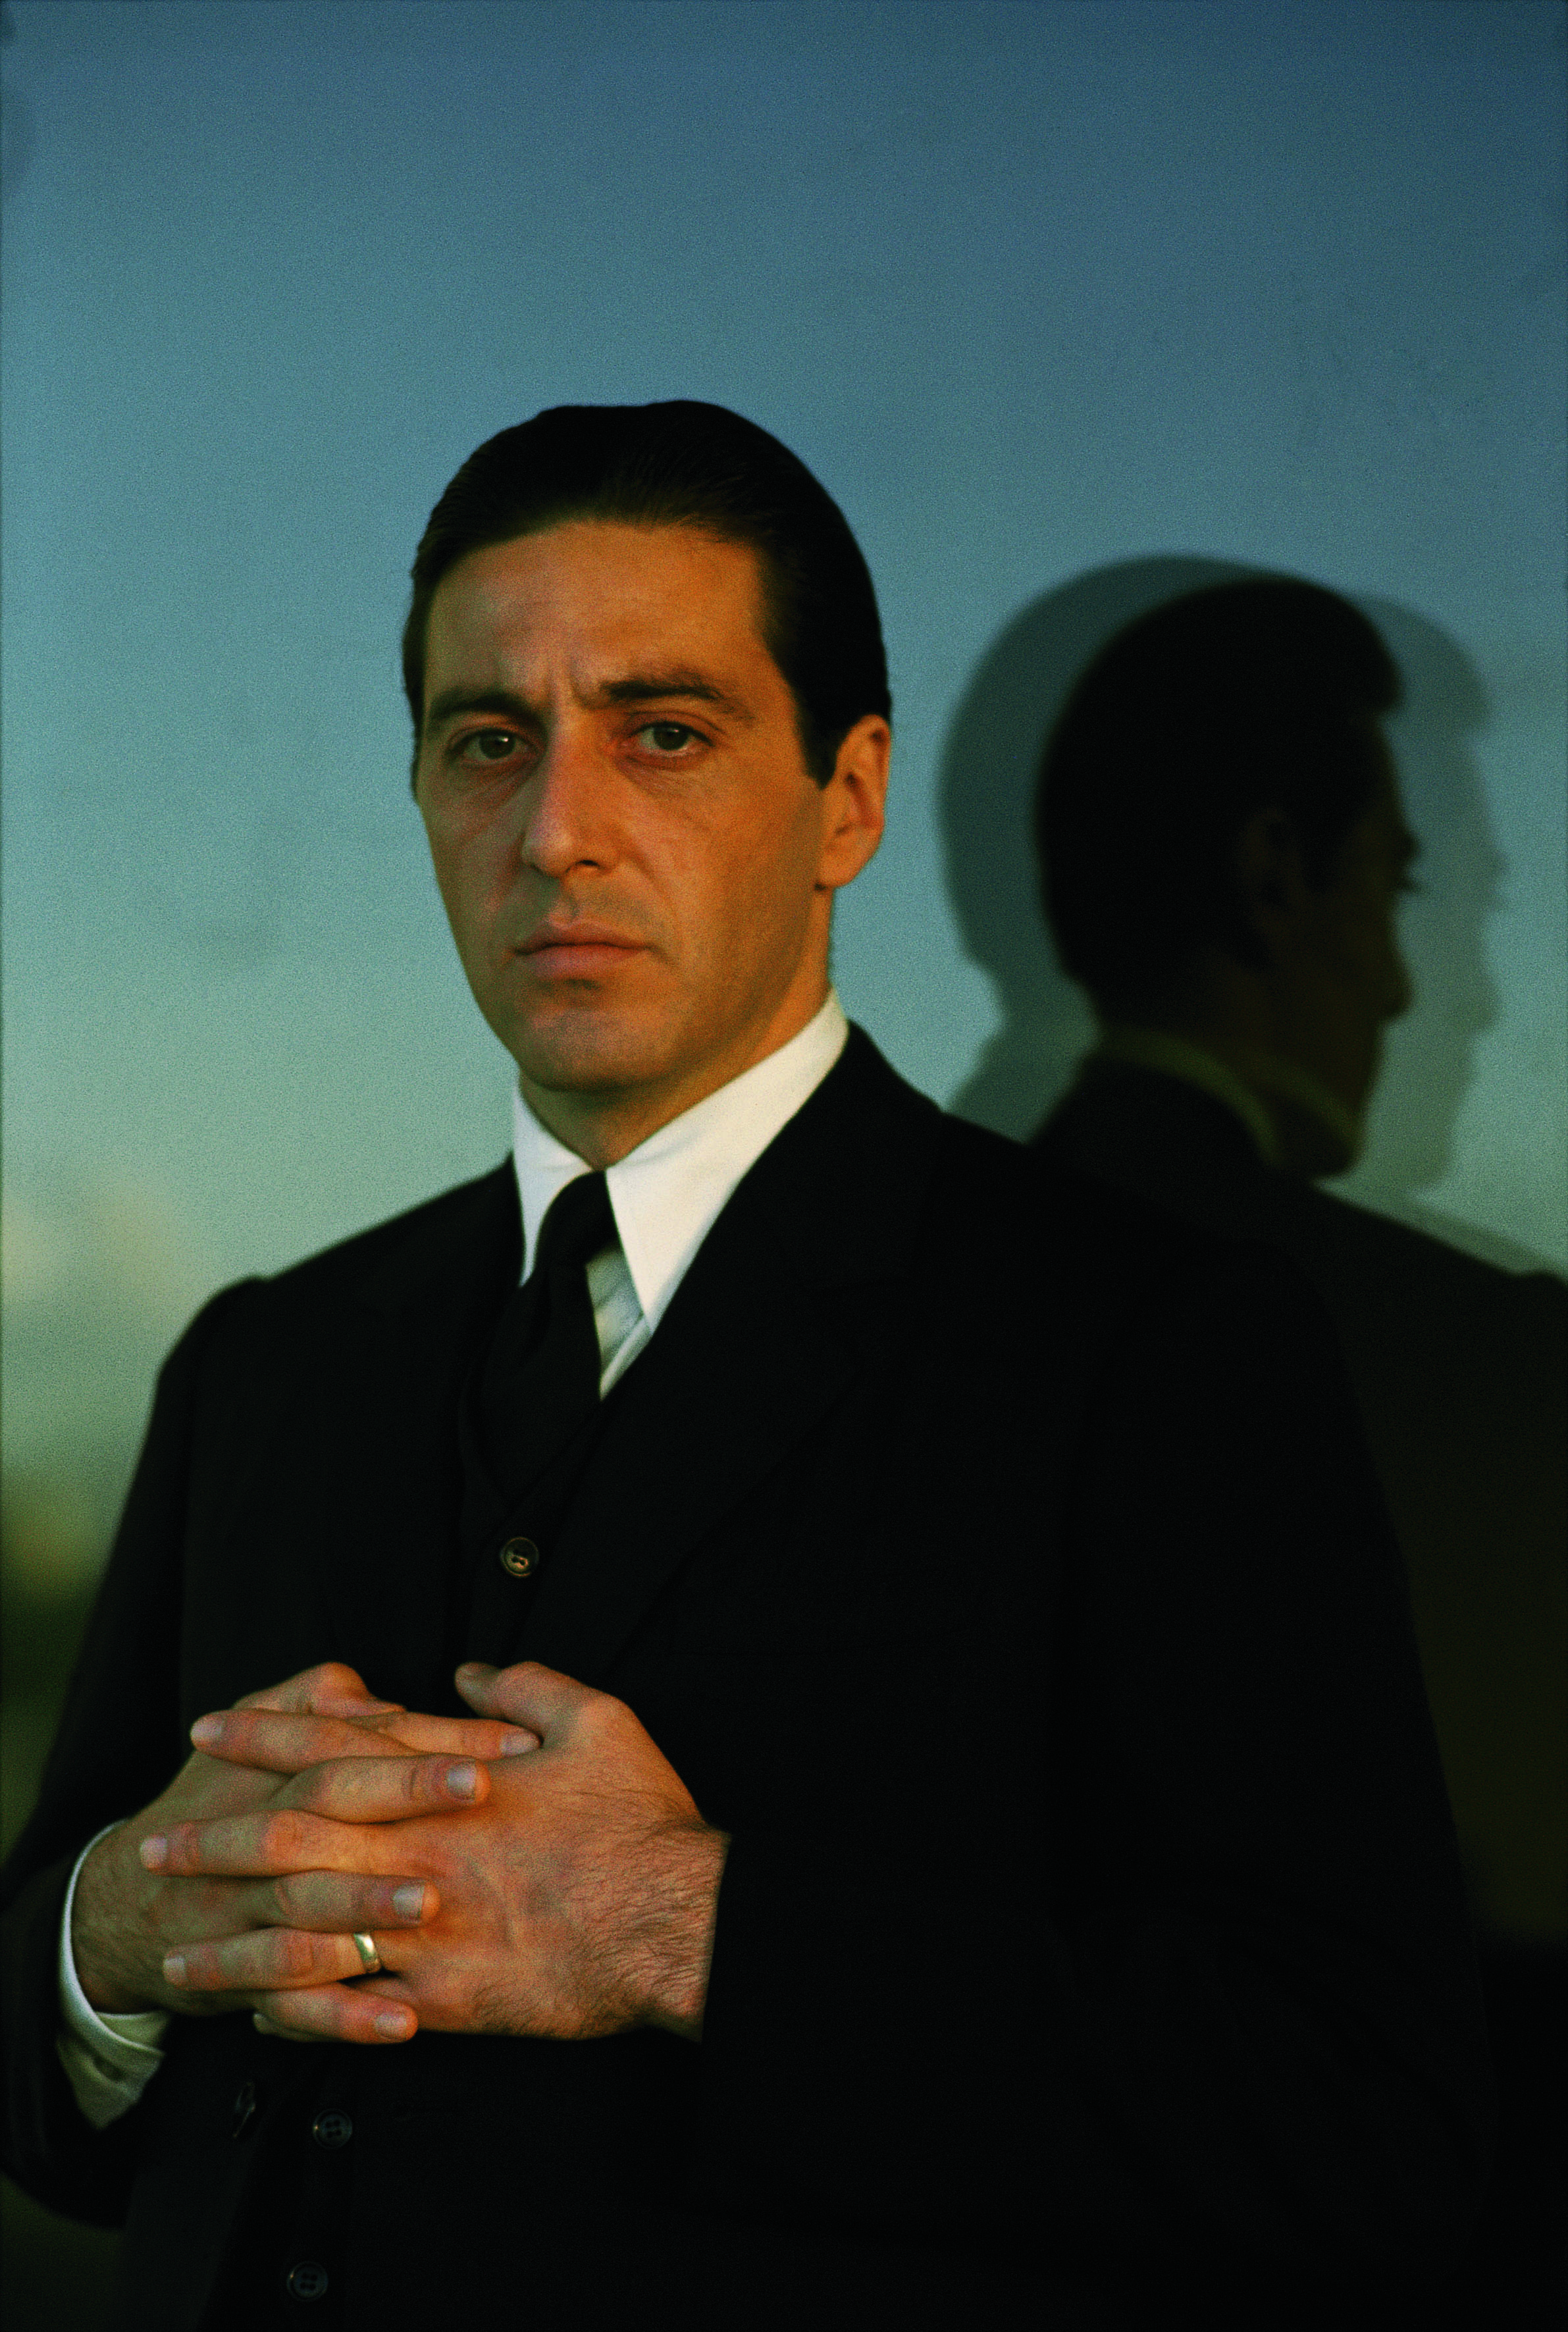 The Godfather – Movie Analysis – Movie Analysis – Sequence 5